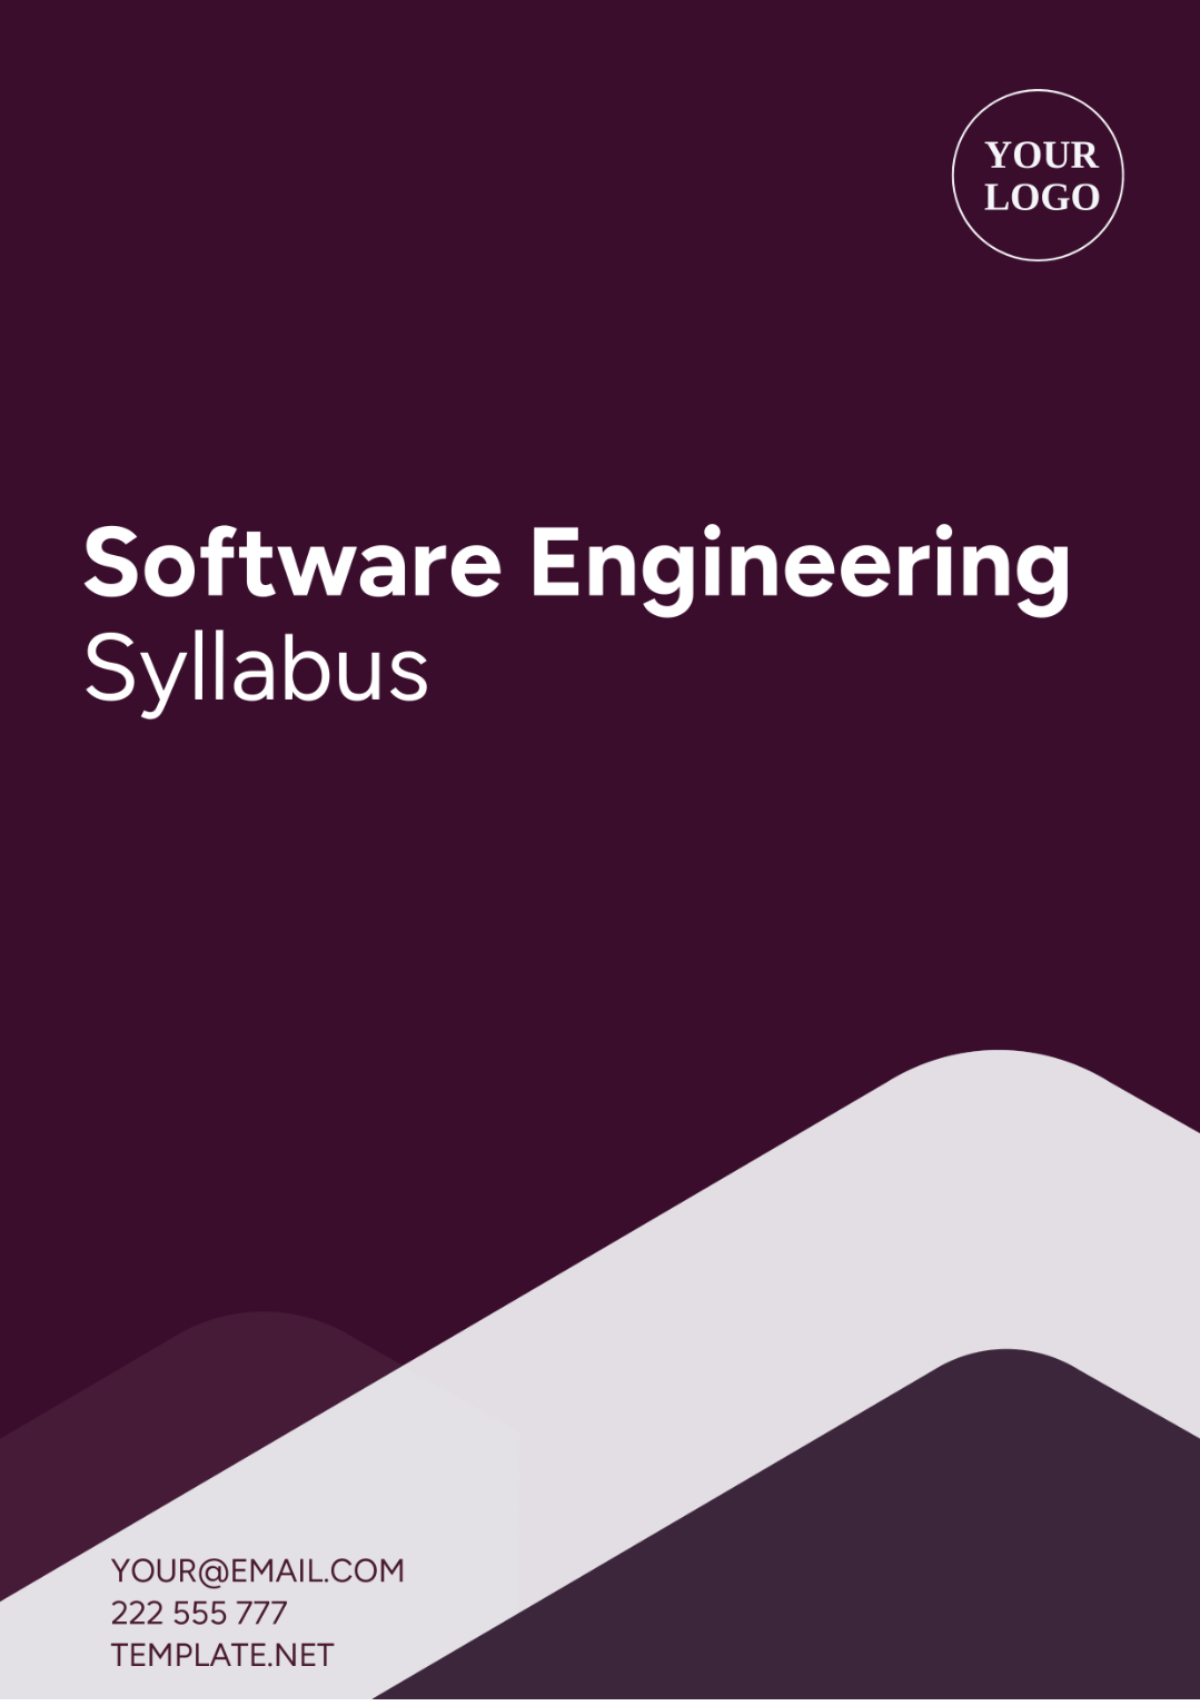 Software Engineering Syllabus Template